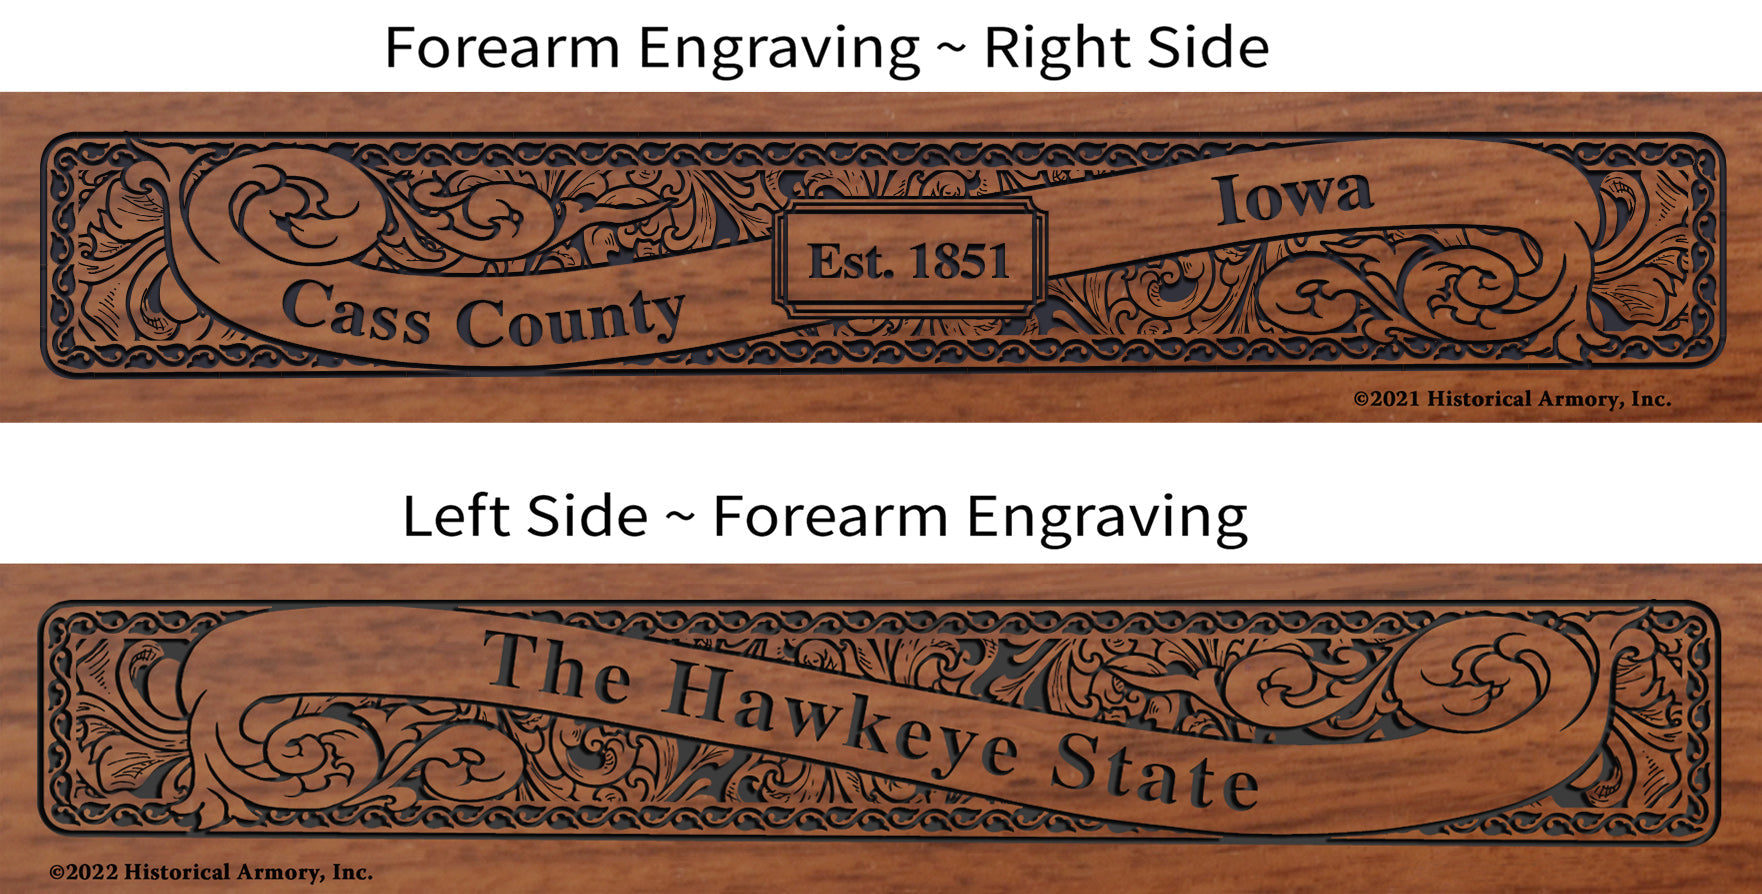 Cass County Iowa Engraved Rifle Forearm